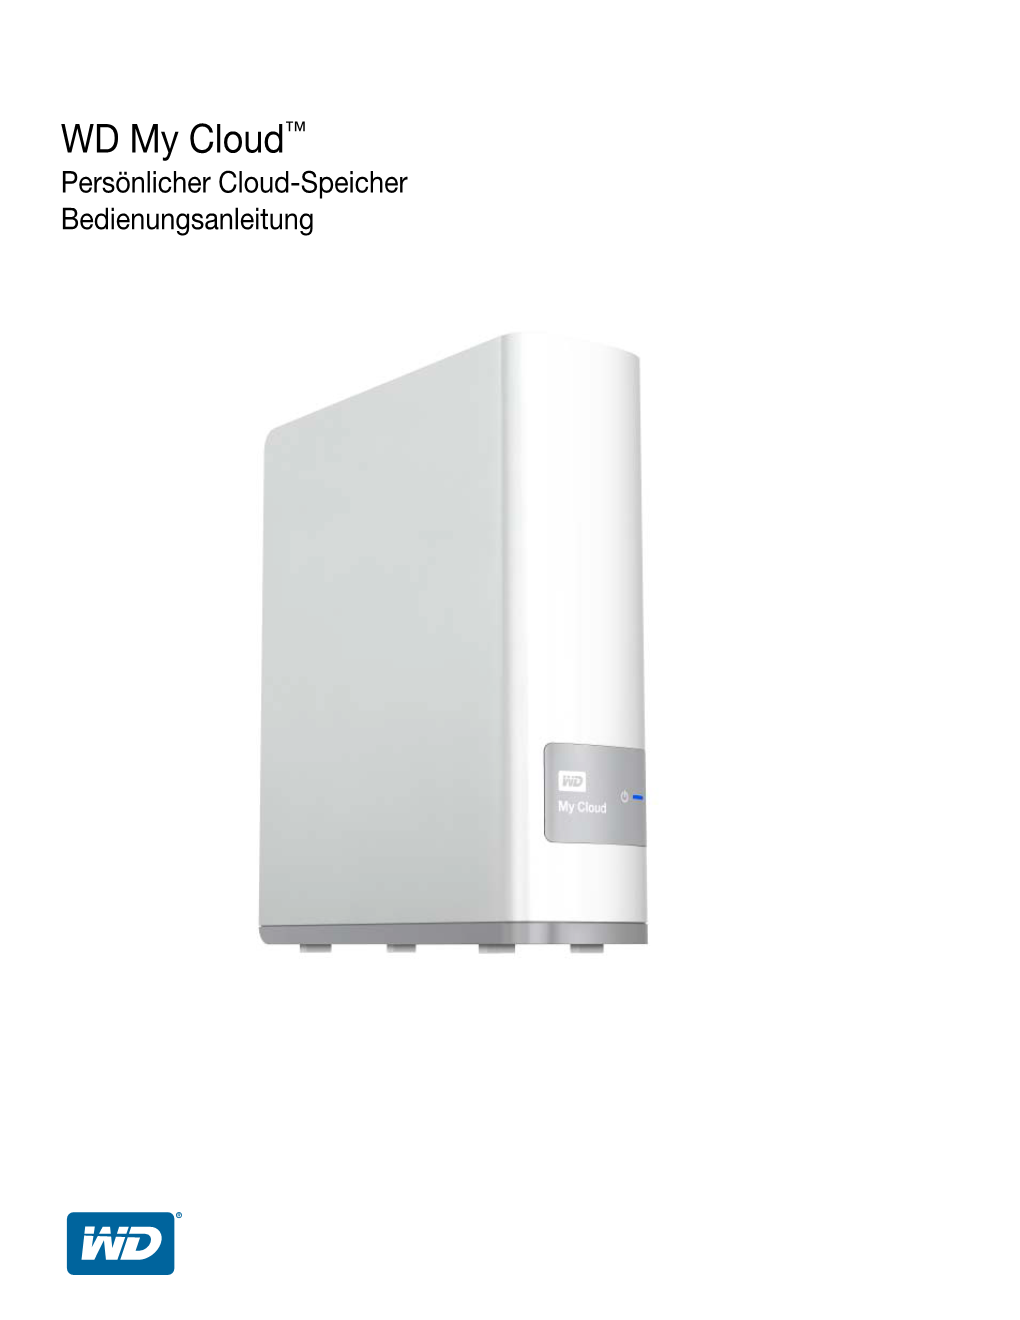 WD My Cloud Personal Cloud Storage User Manual